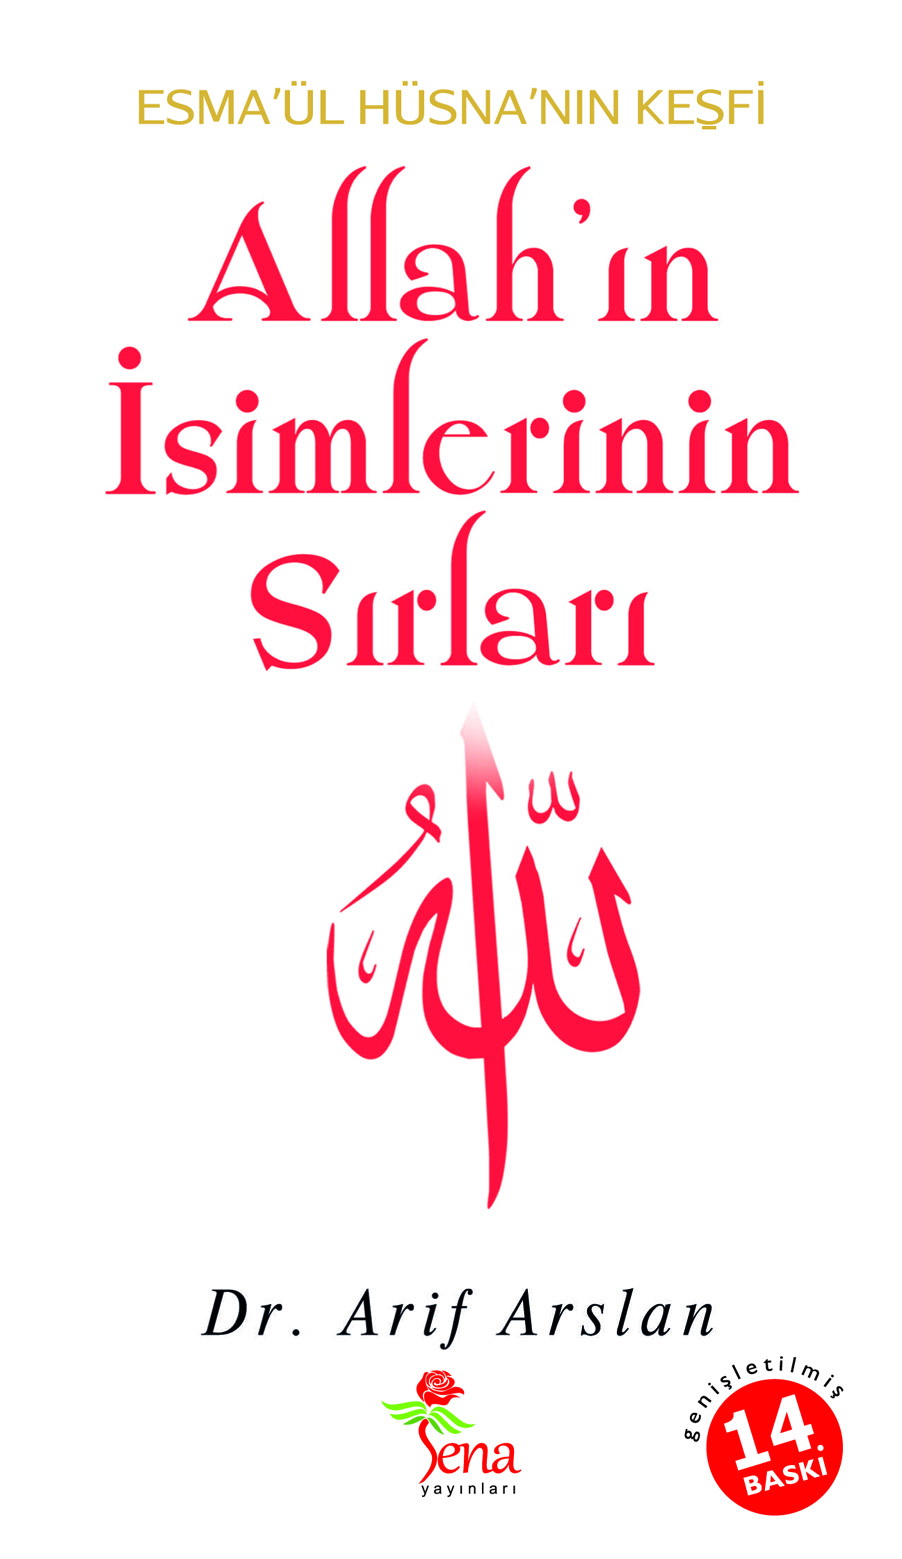 //www.arifarslan.com.tr/wp-content/uploads/2021/04/arif-arslan-allahin-isimlerinin-sirlari.jpg